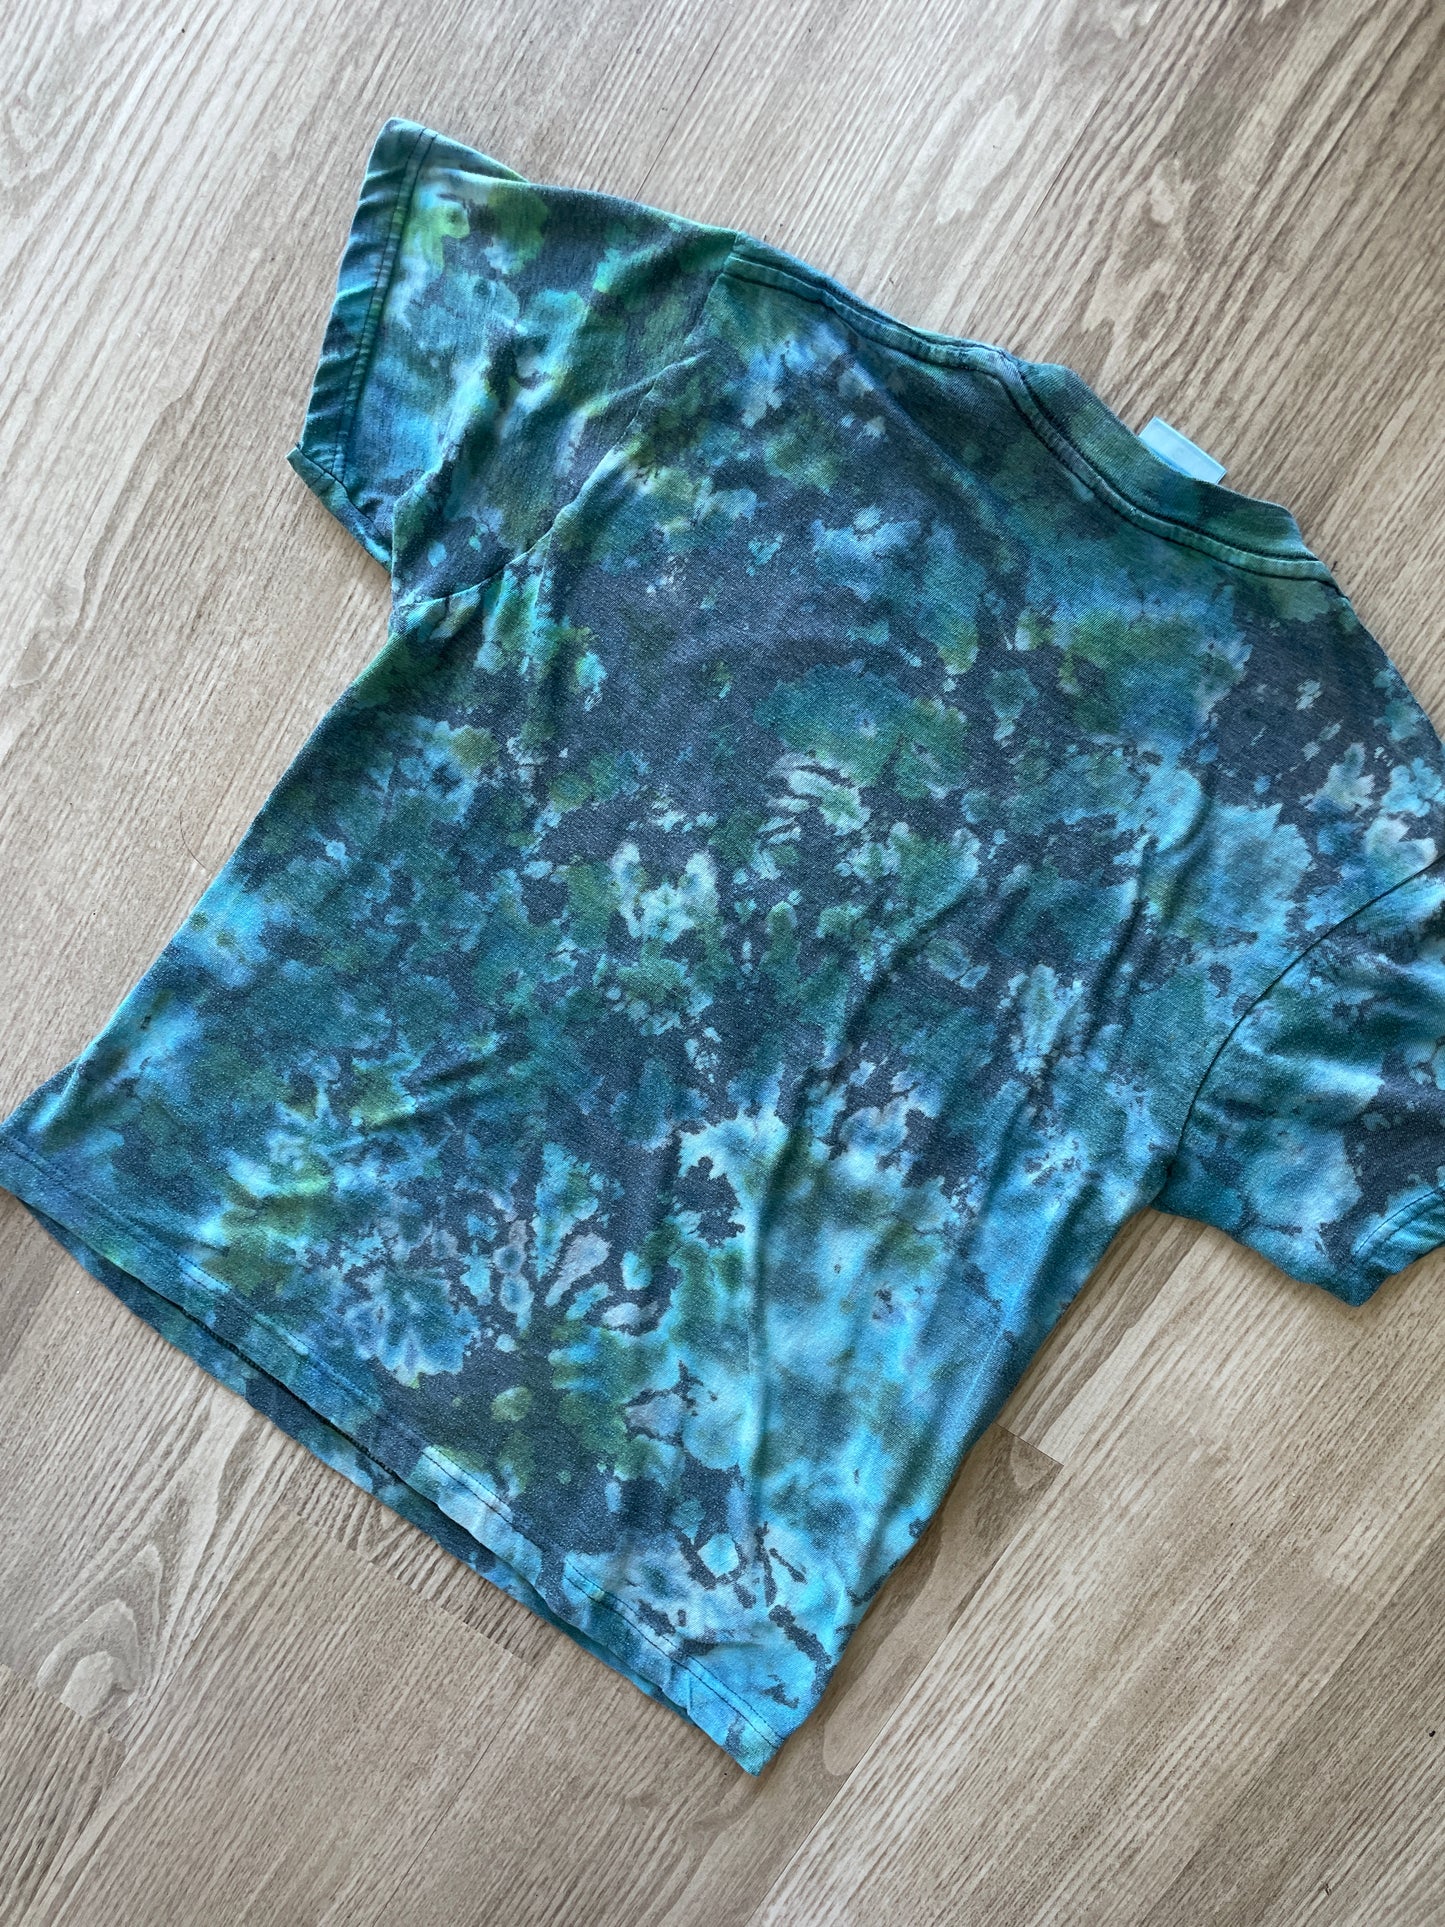 SMALL Men’s I Heart NY Handmade Tie Dye T-Shirt | One-Of-a-Kind Blue and Green Short Sleeve